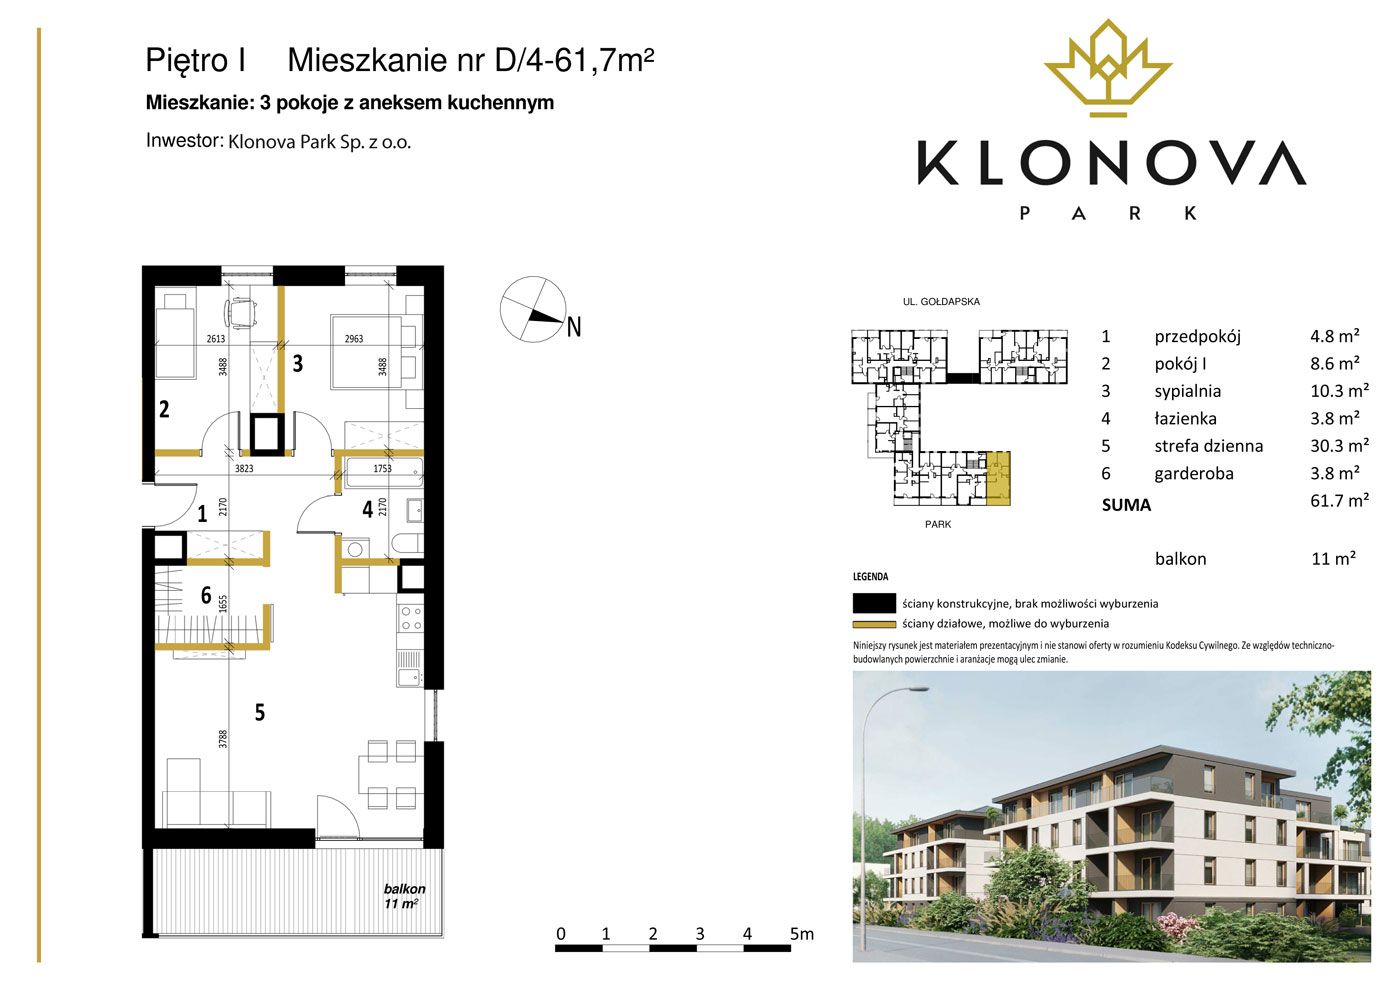 Apartamenty Klonova Park - Plan mieszkania D/4